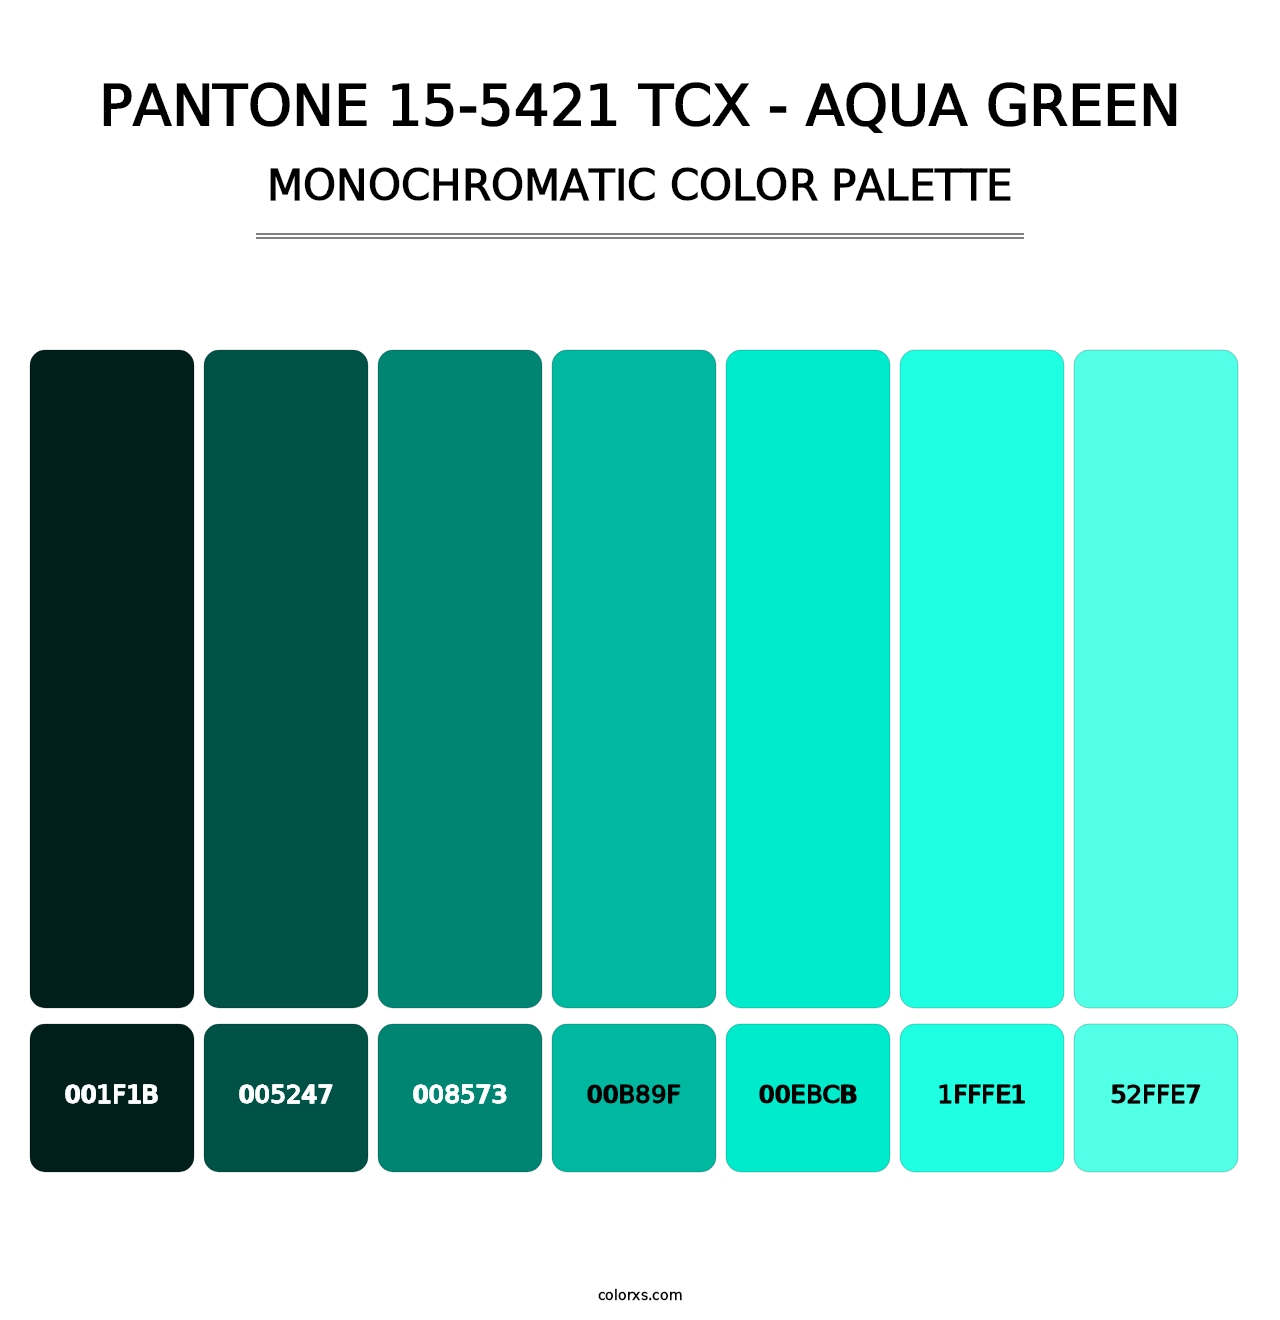 PANTONE 15-5421 TCX - Aqua Green - Monochromatic Color Palette